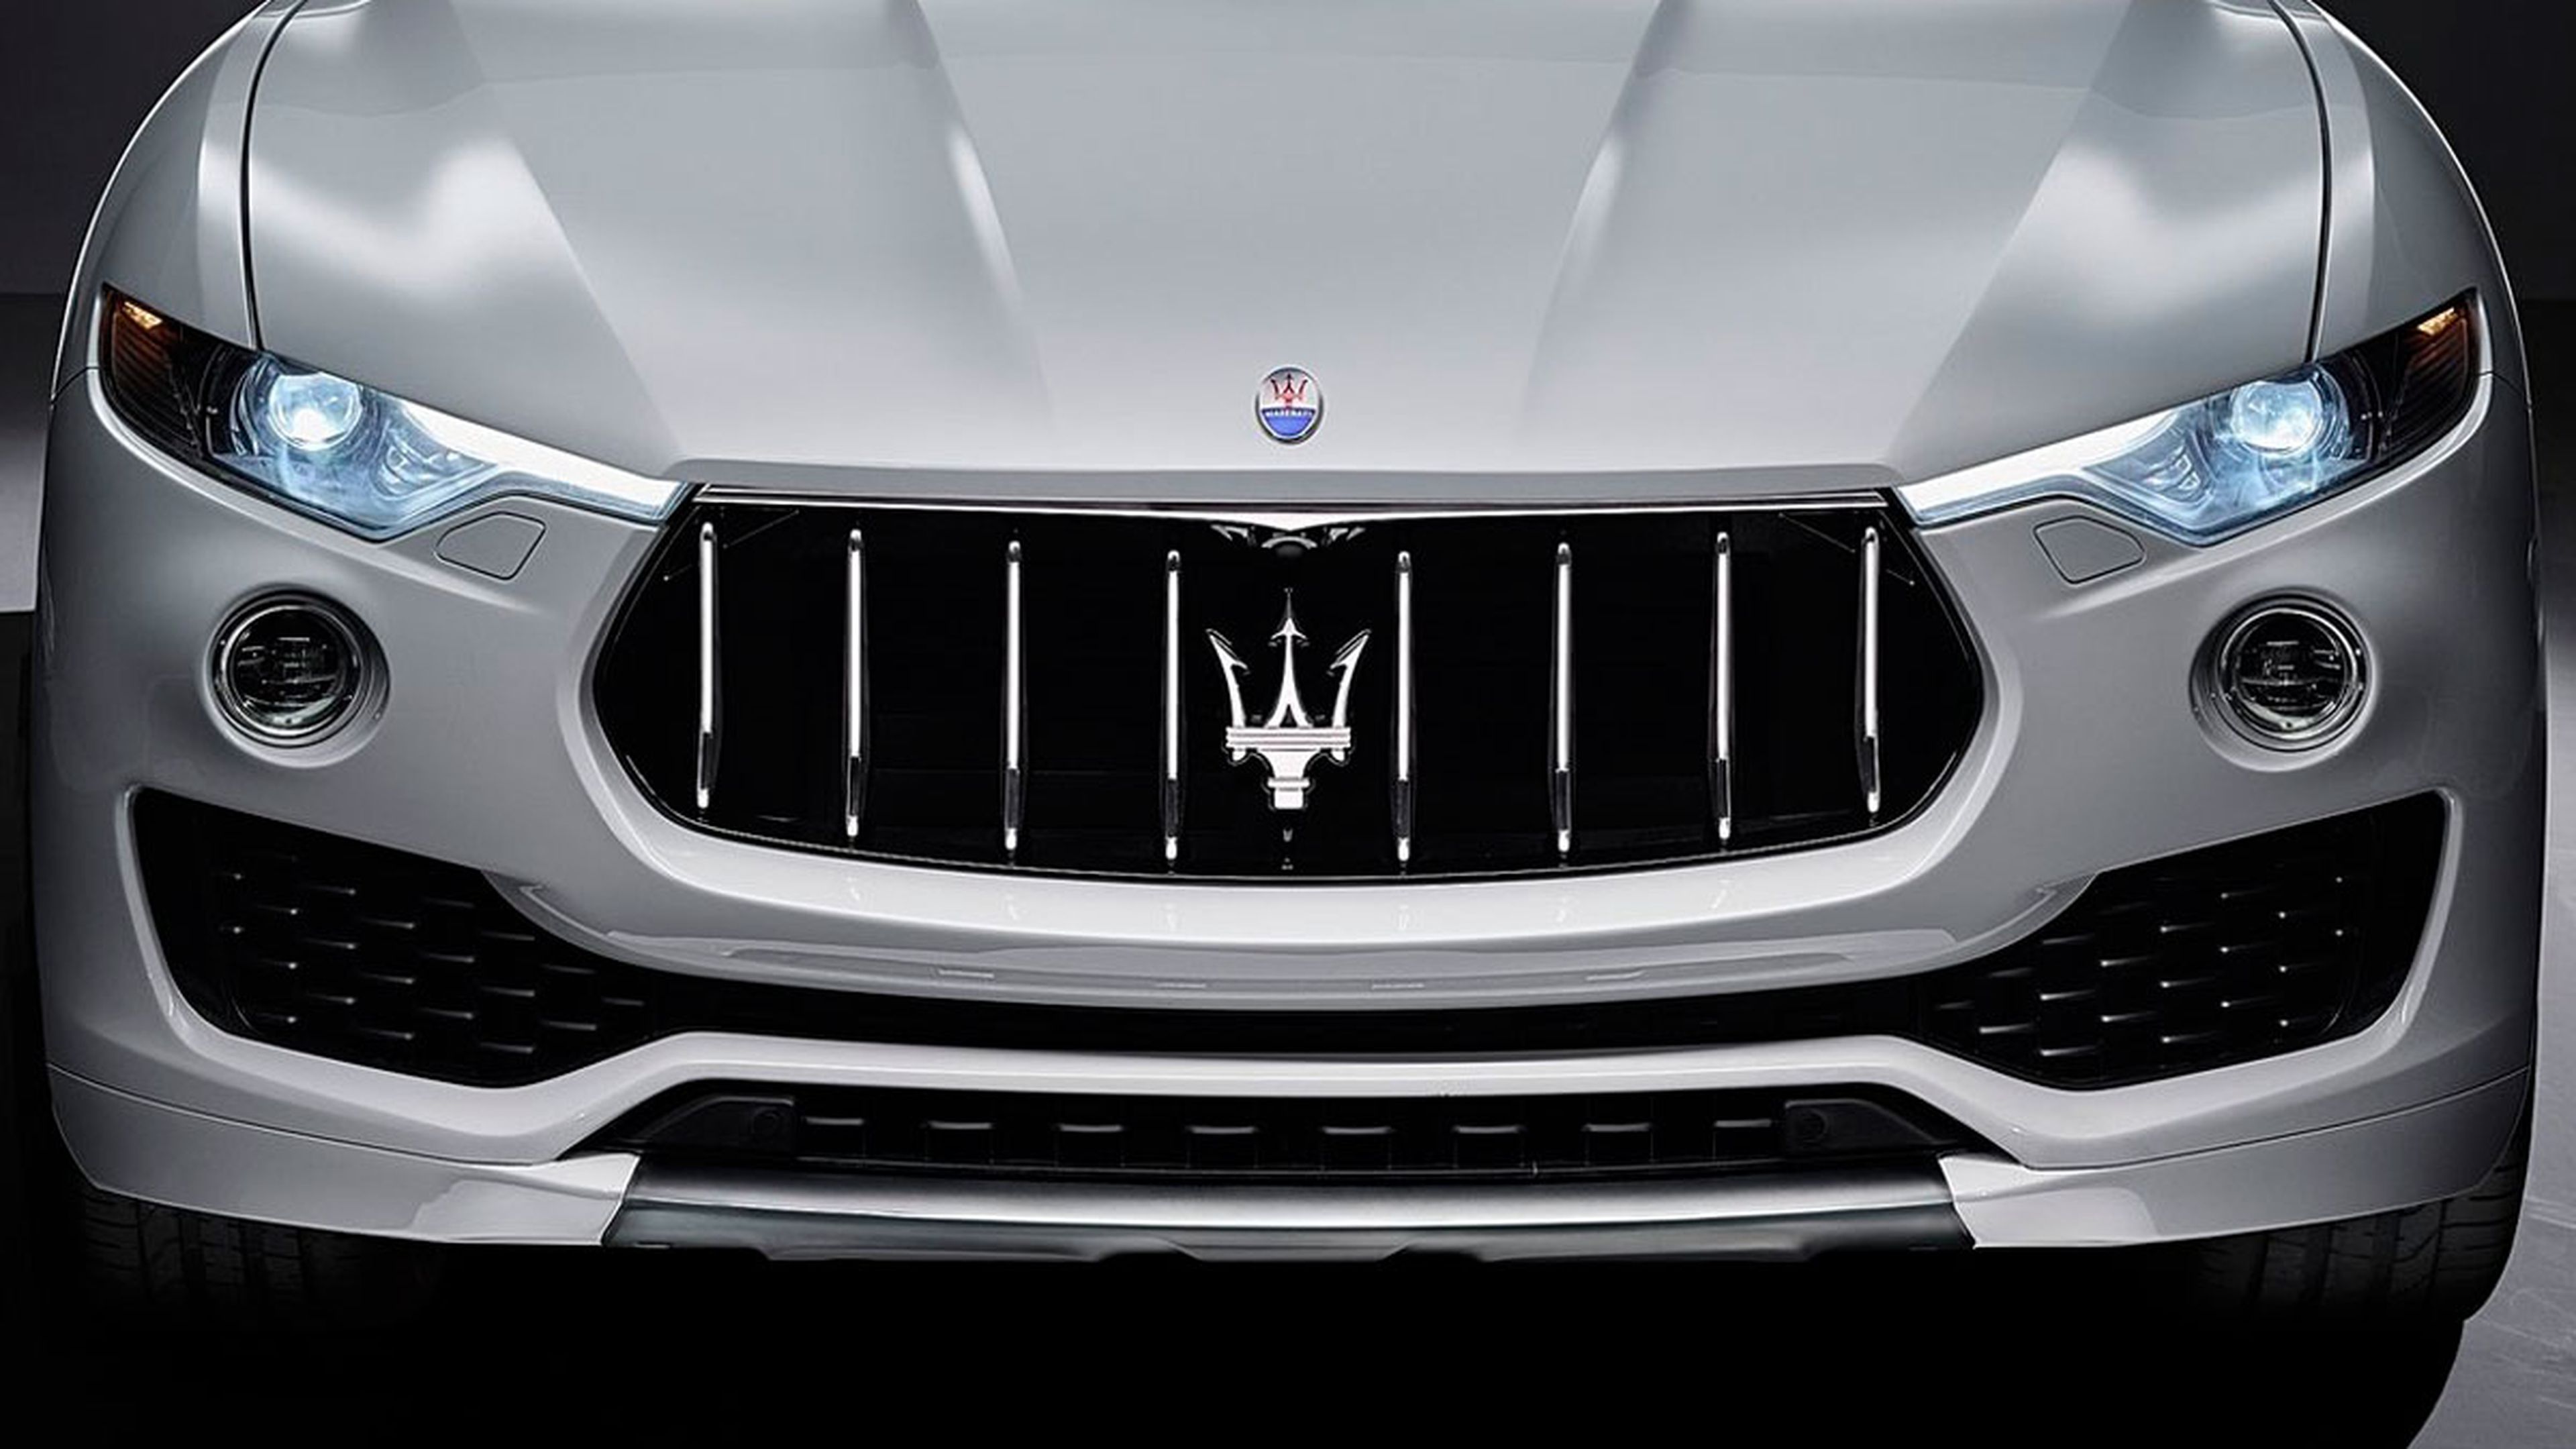 Maserati Kubang 2018: ¿el SUV compacto de Maserati?